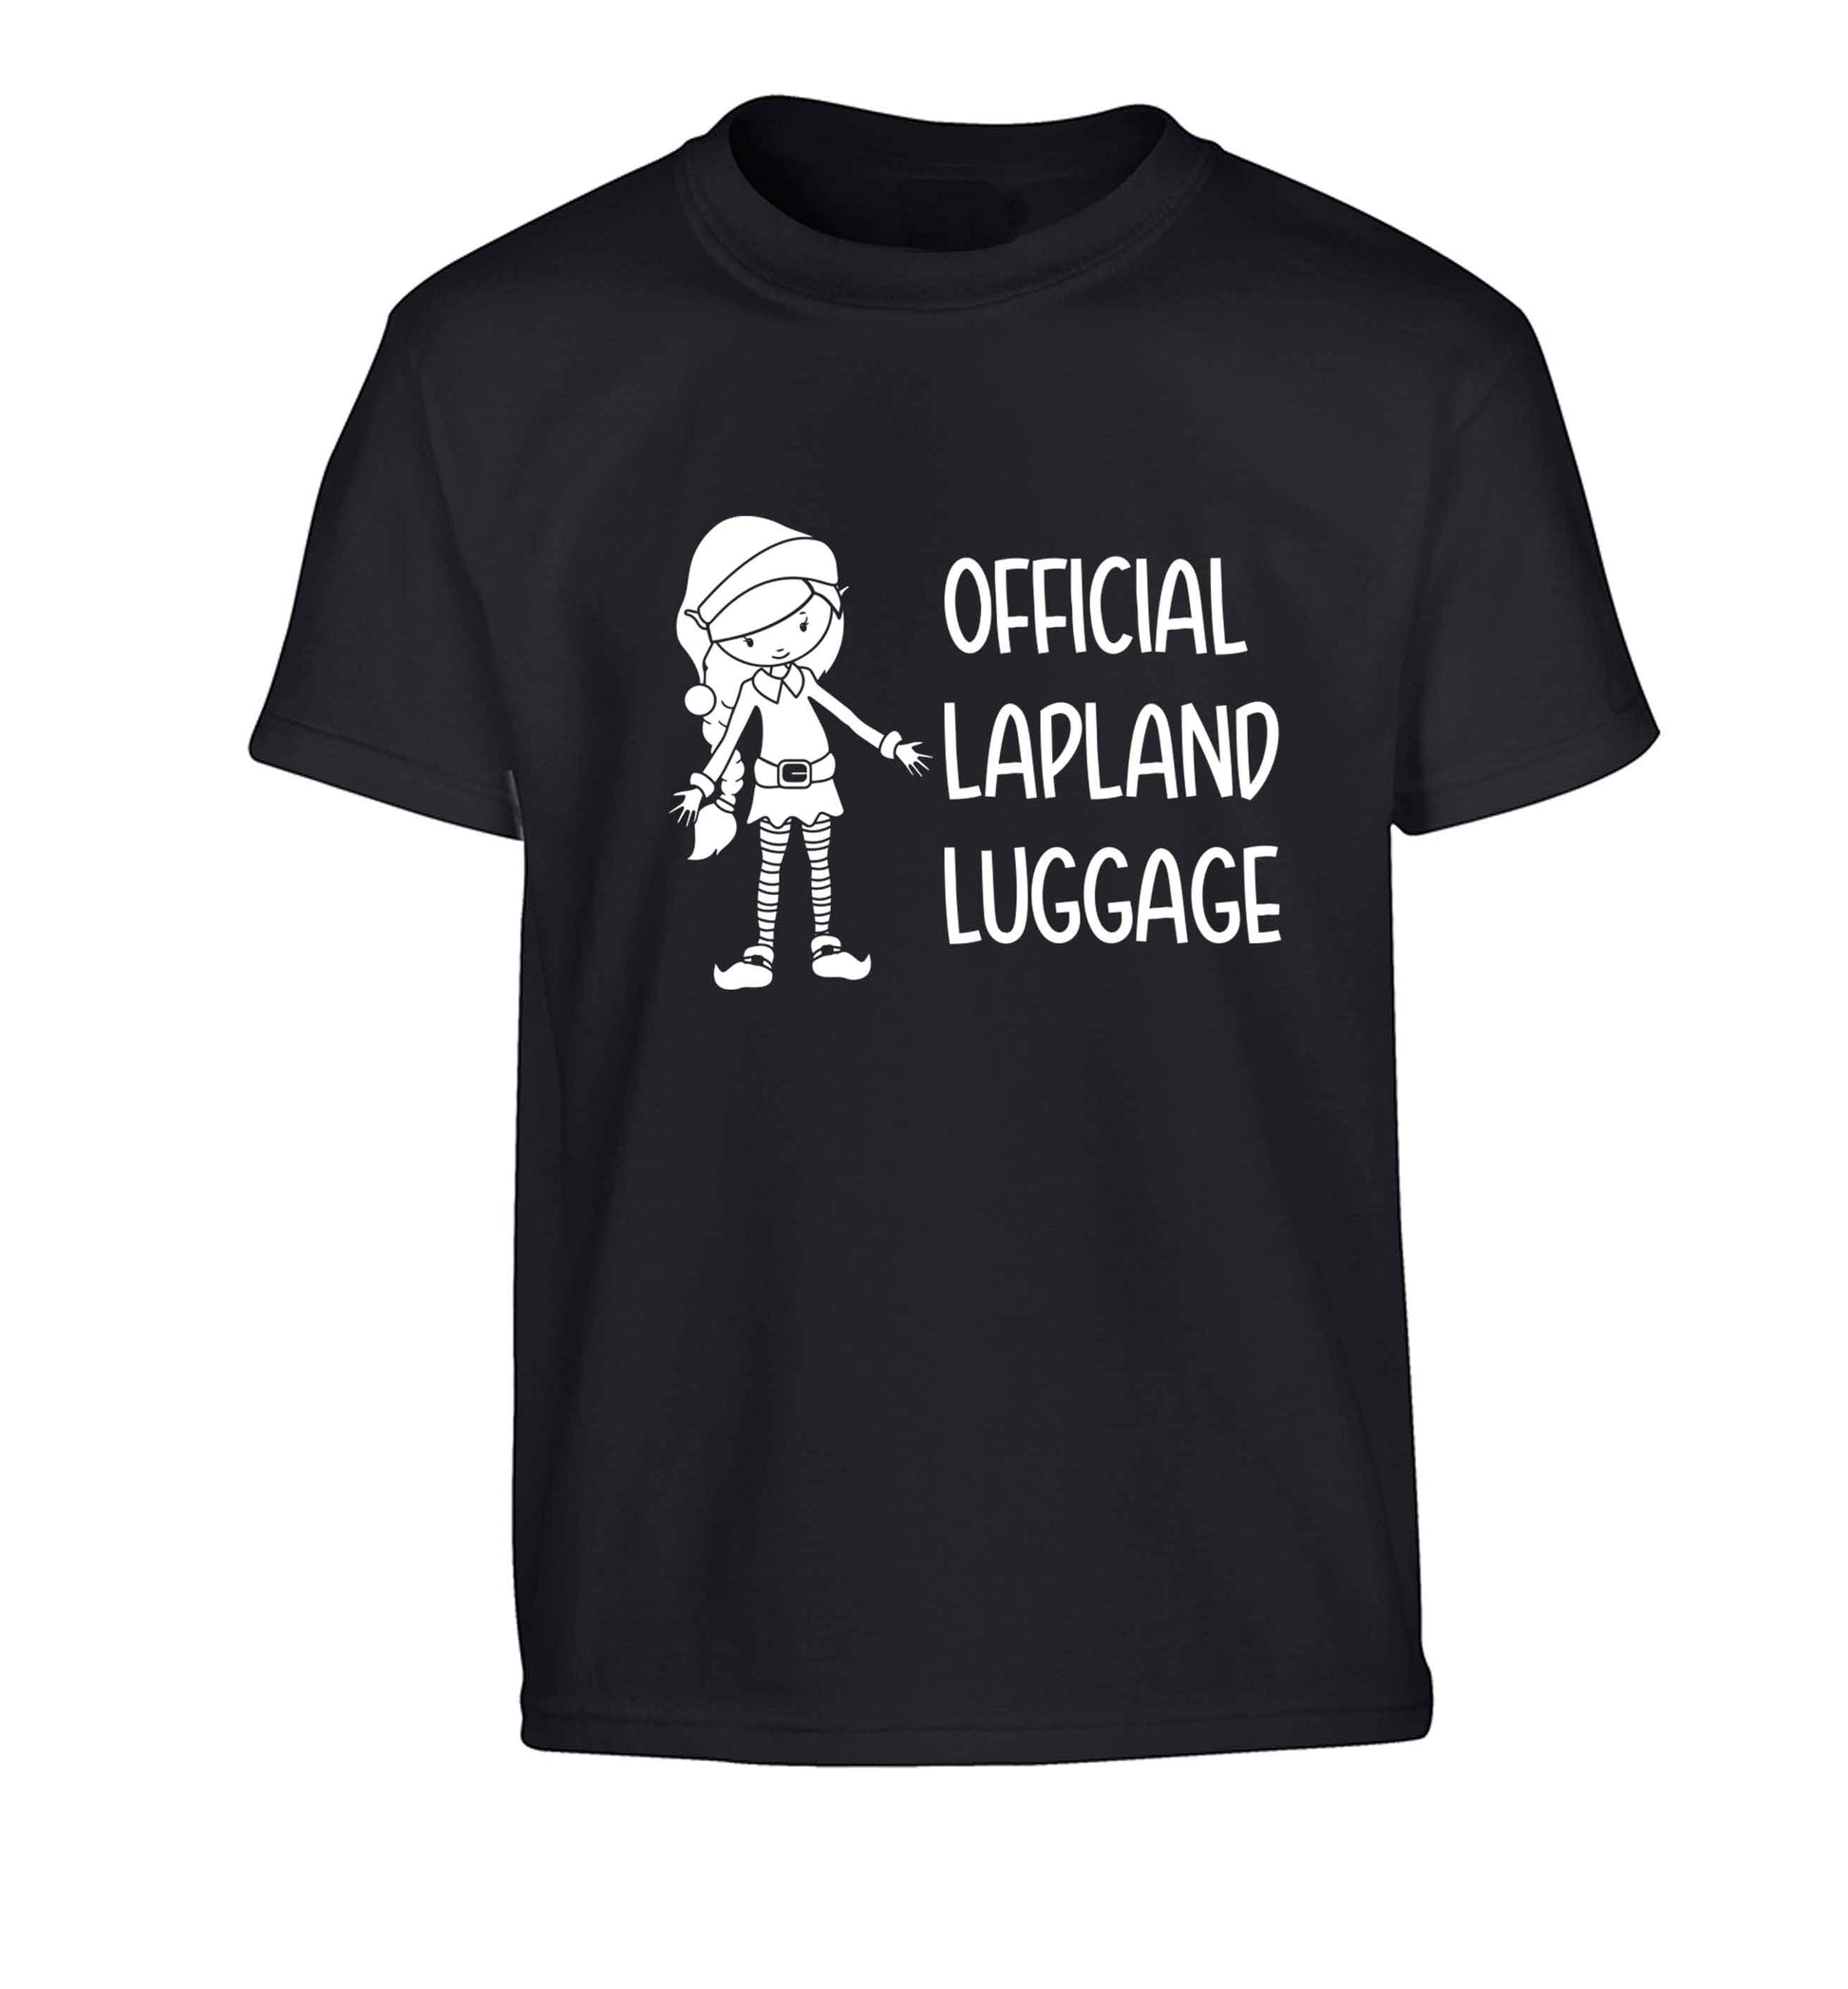 Official lapland luggage - Elf snowflake Children's black Tshirt 12-13 Years